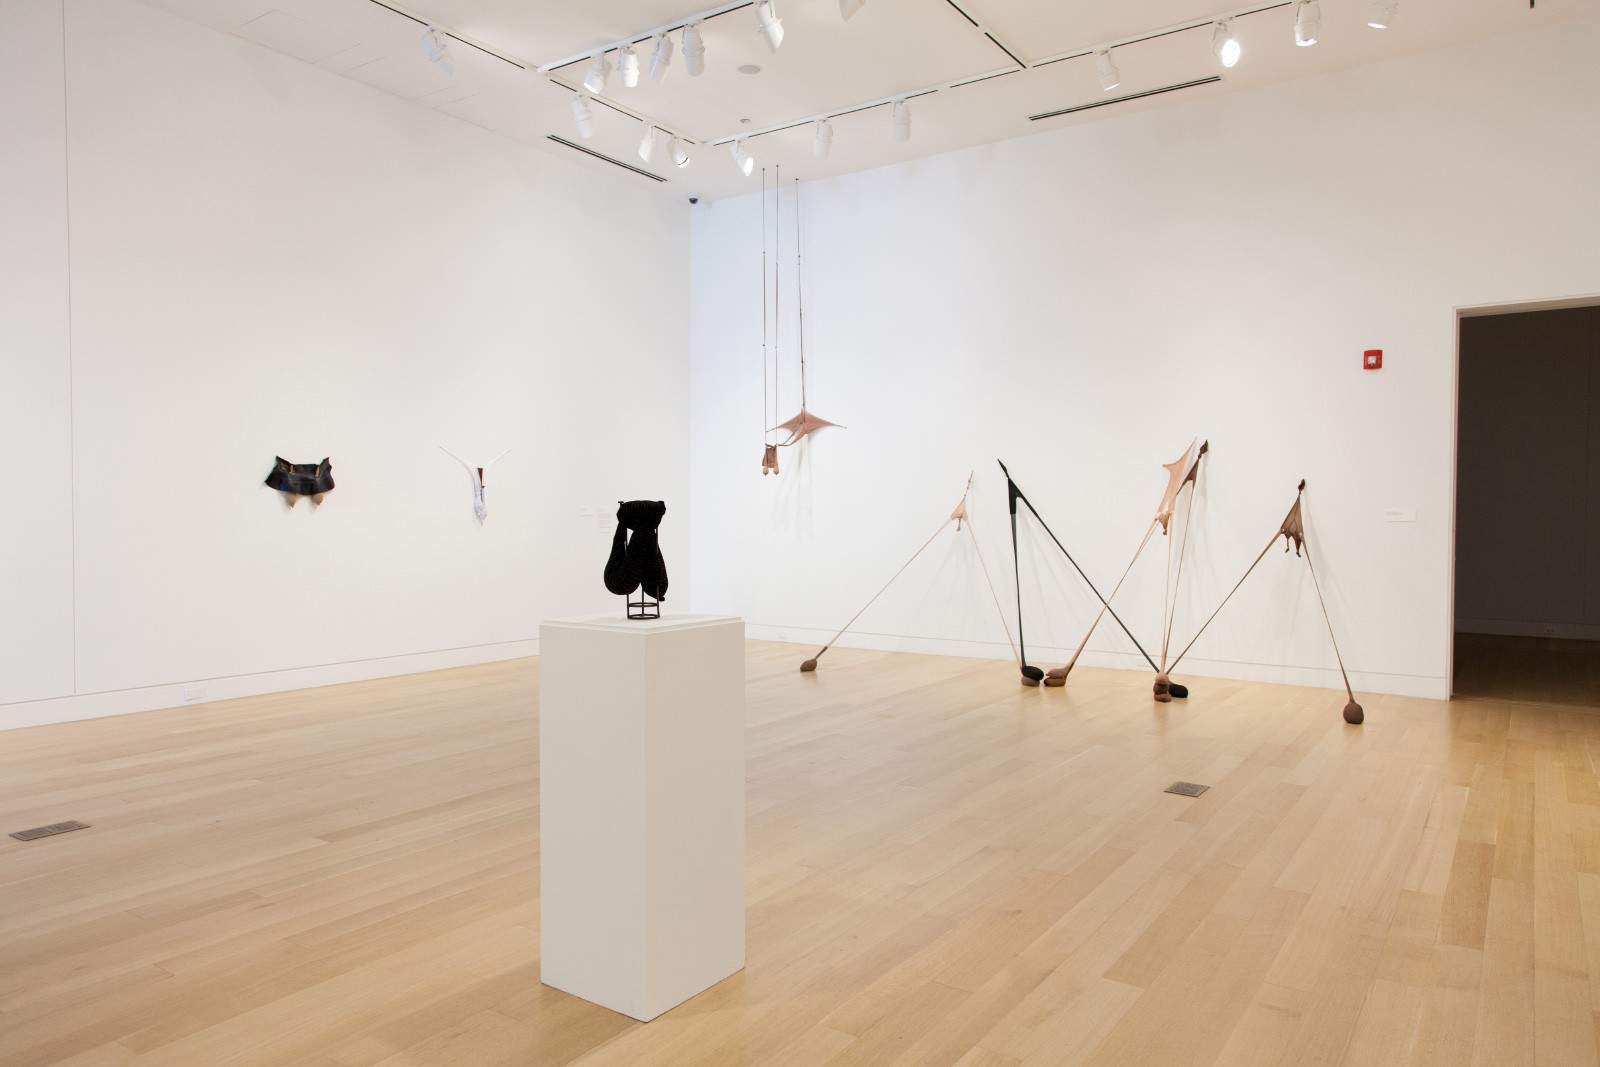 Senga Nengudi: Improvisational Gestures, installation view, 2017